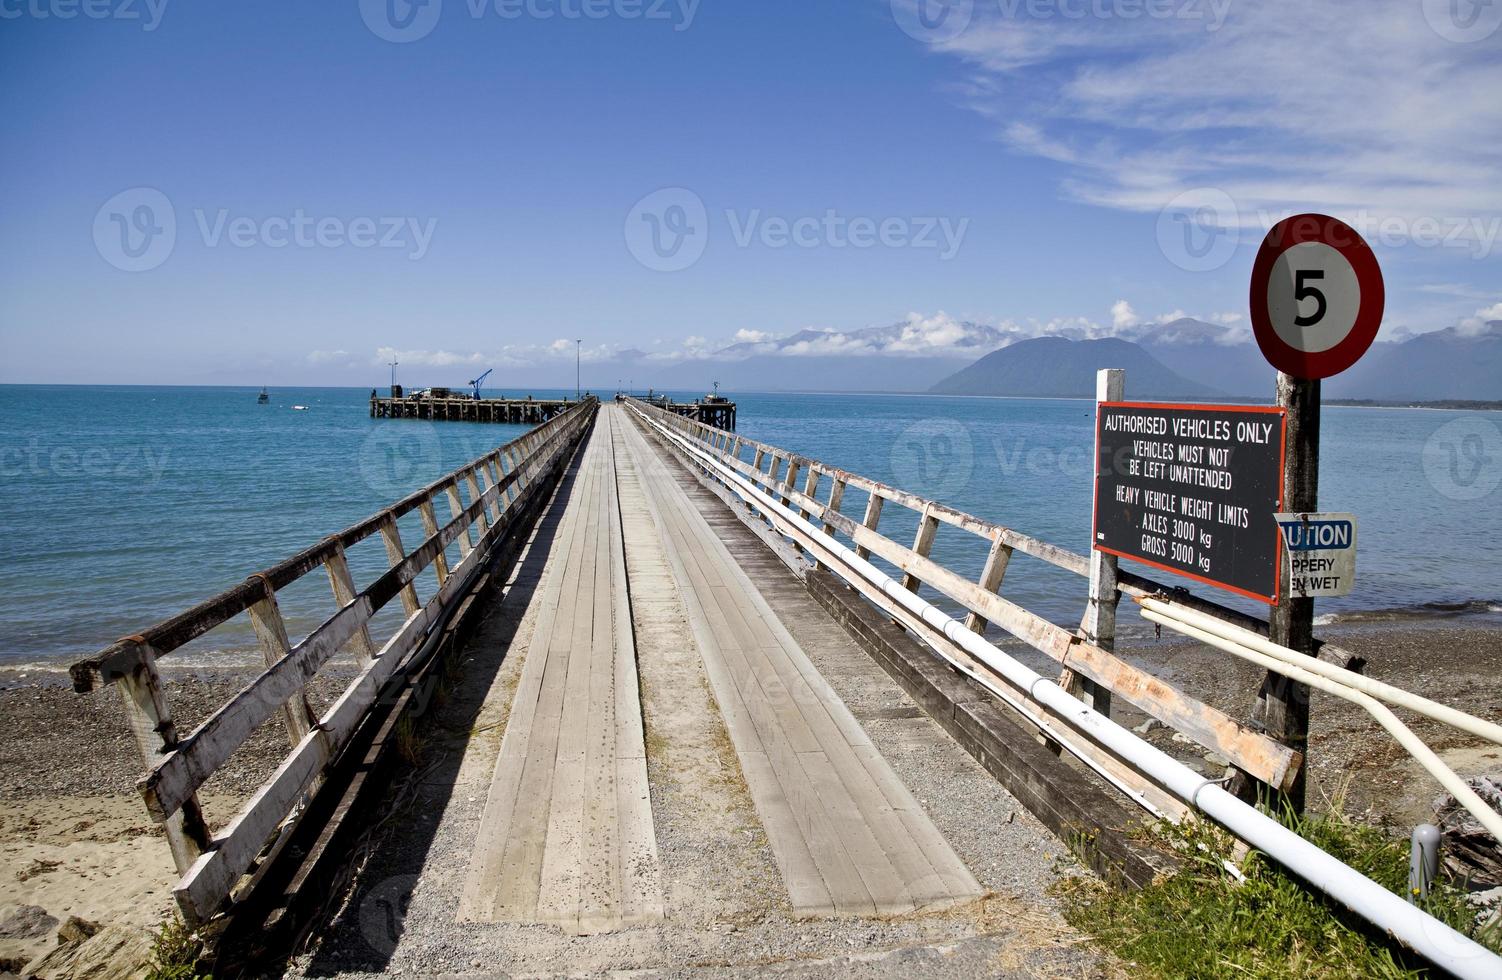 Jackson Bay Nieuw-Zeeland foto